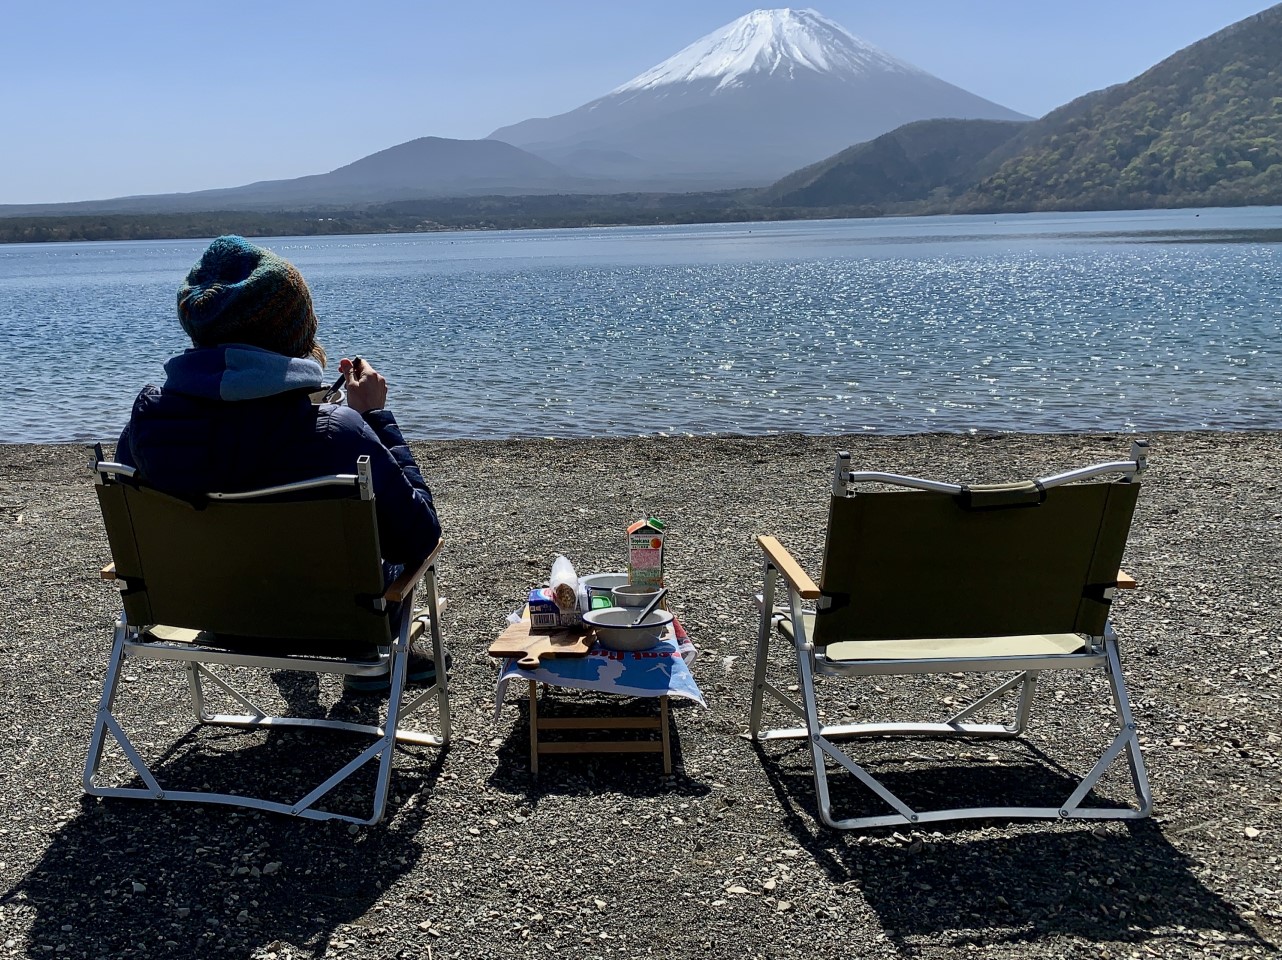 Camping under Mount Fuji